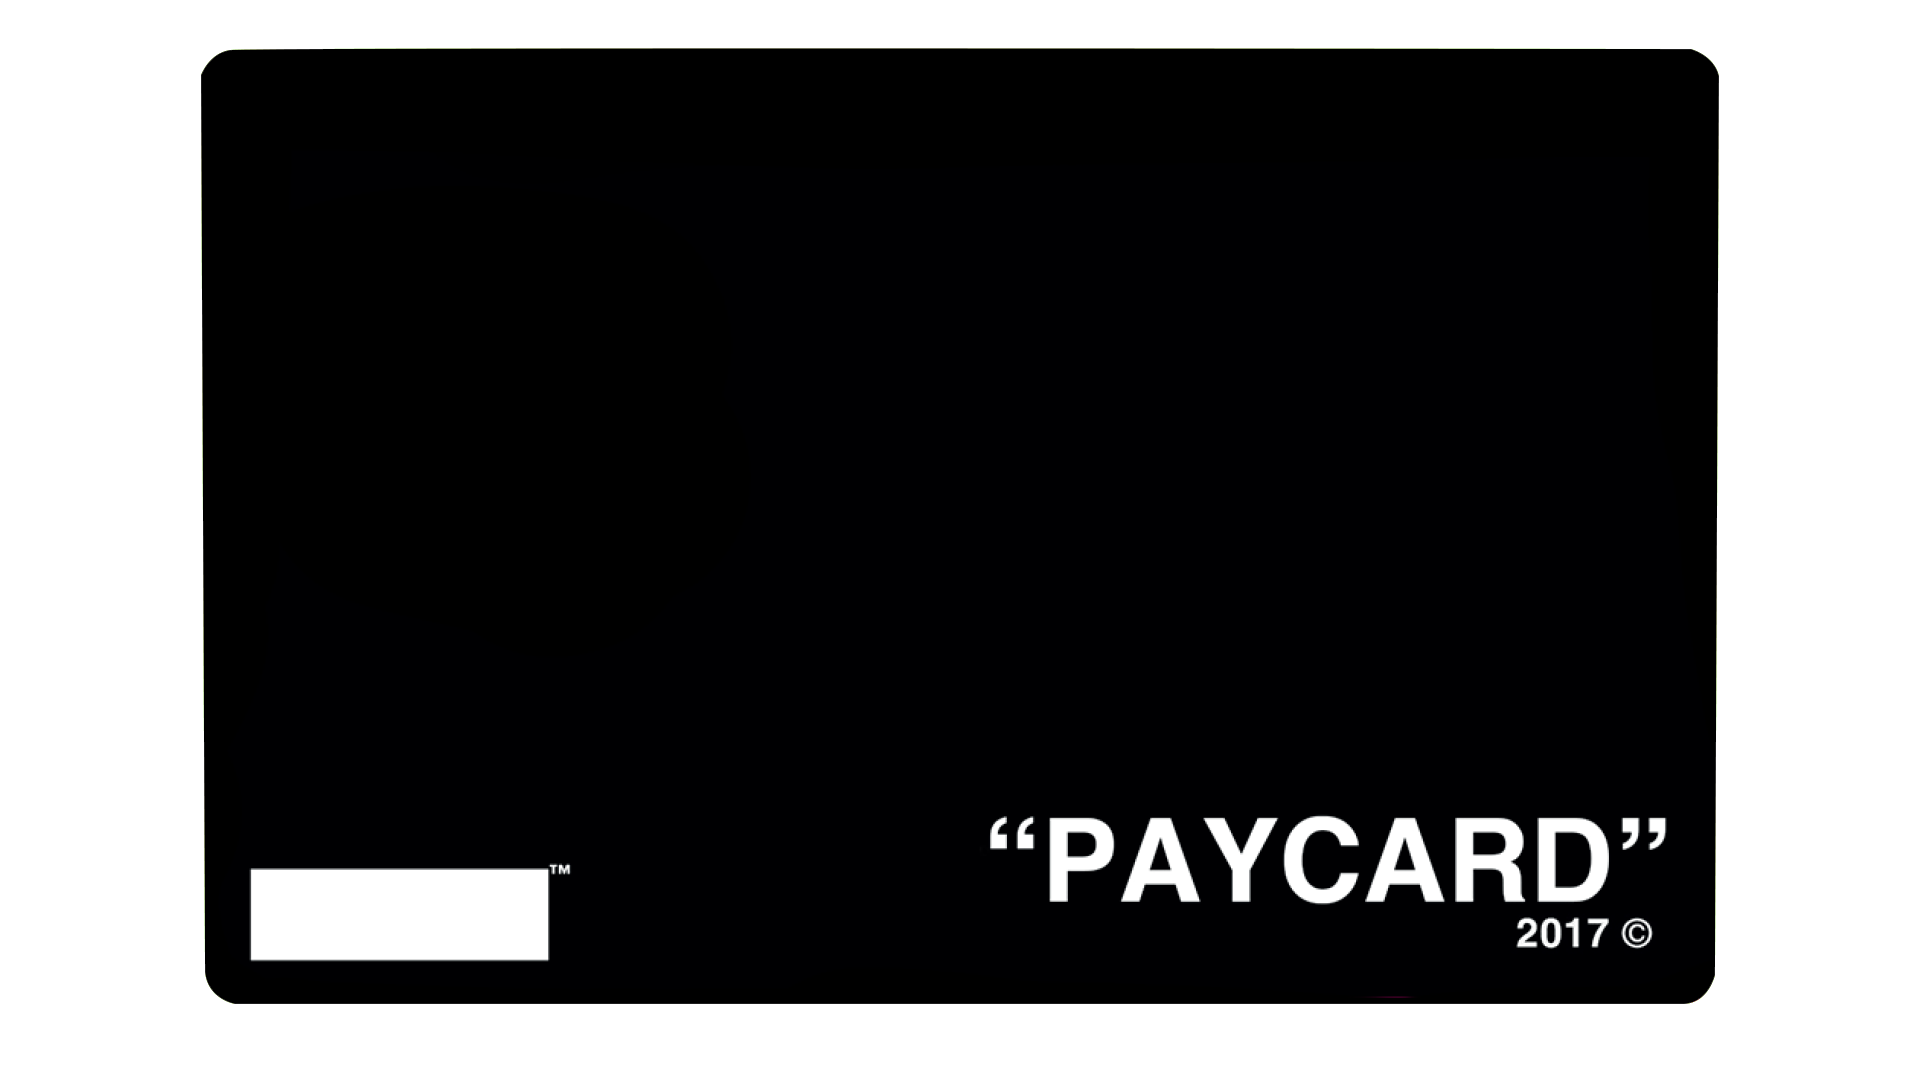 Paycard 2017